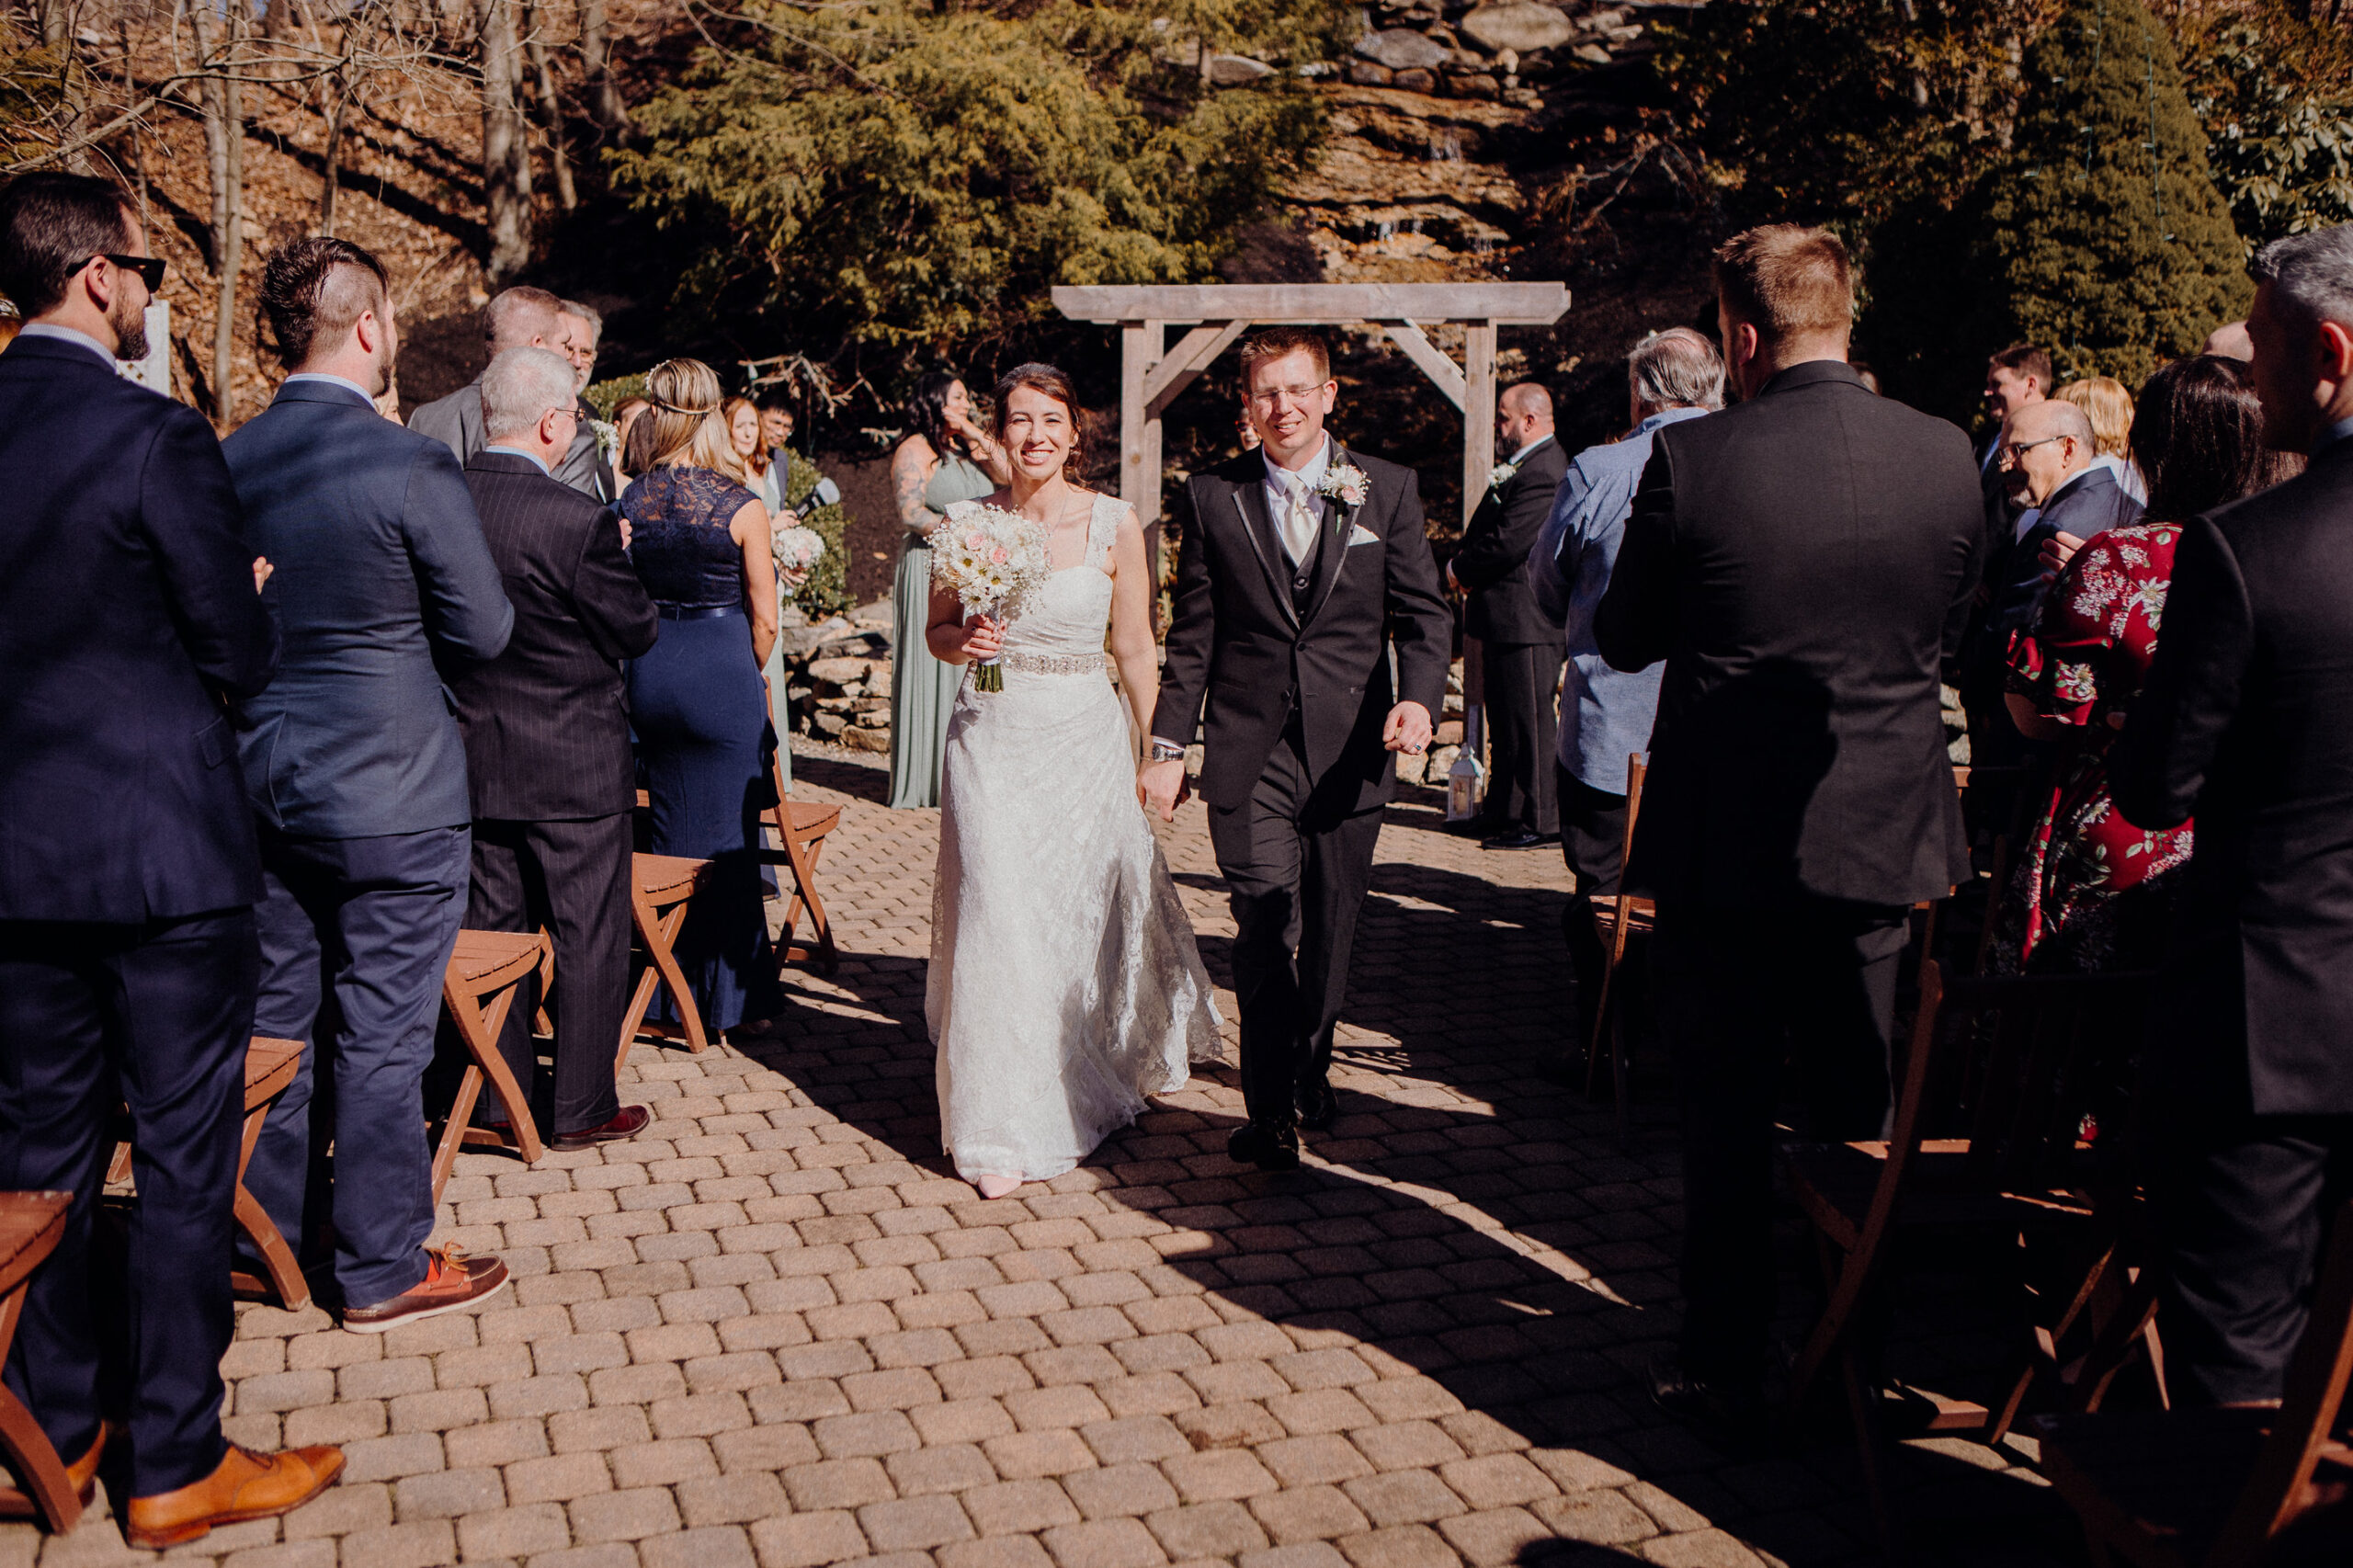 THE WOODWINDS WEDDING | James & Jennifer